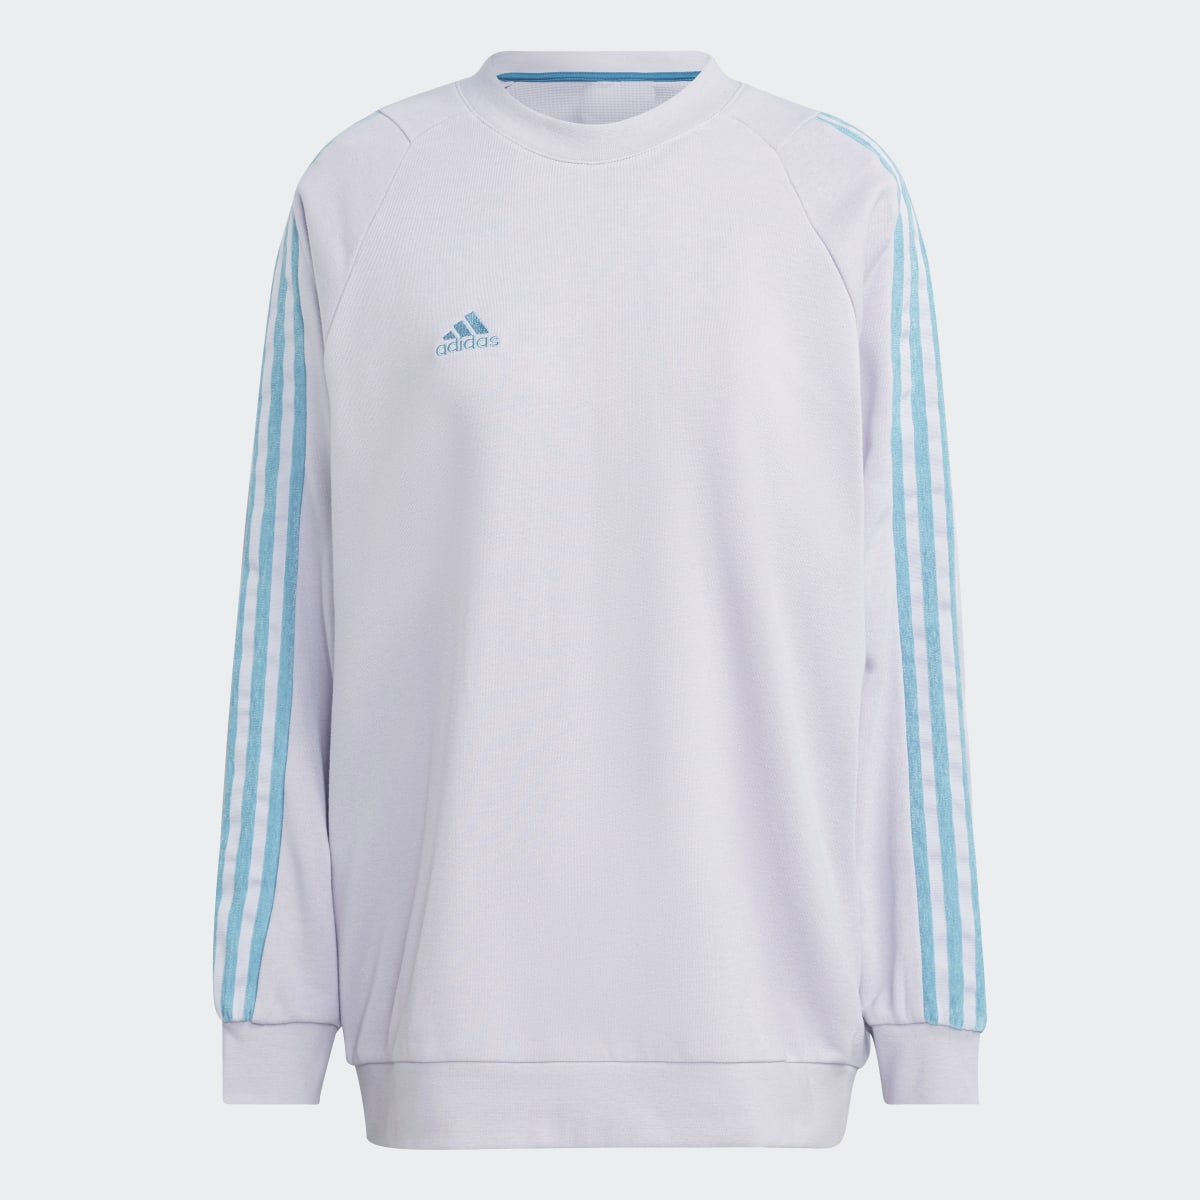 Adidas Tiro Sweatshirt – Genderneutral. 4